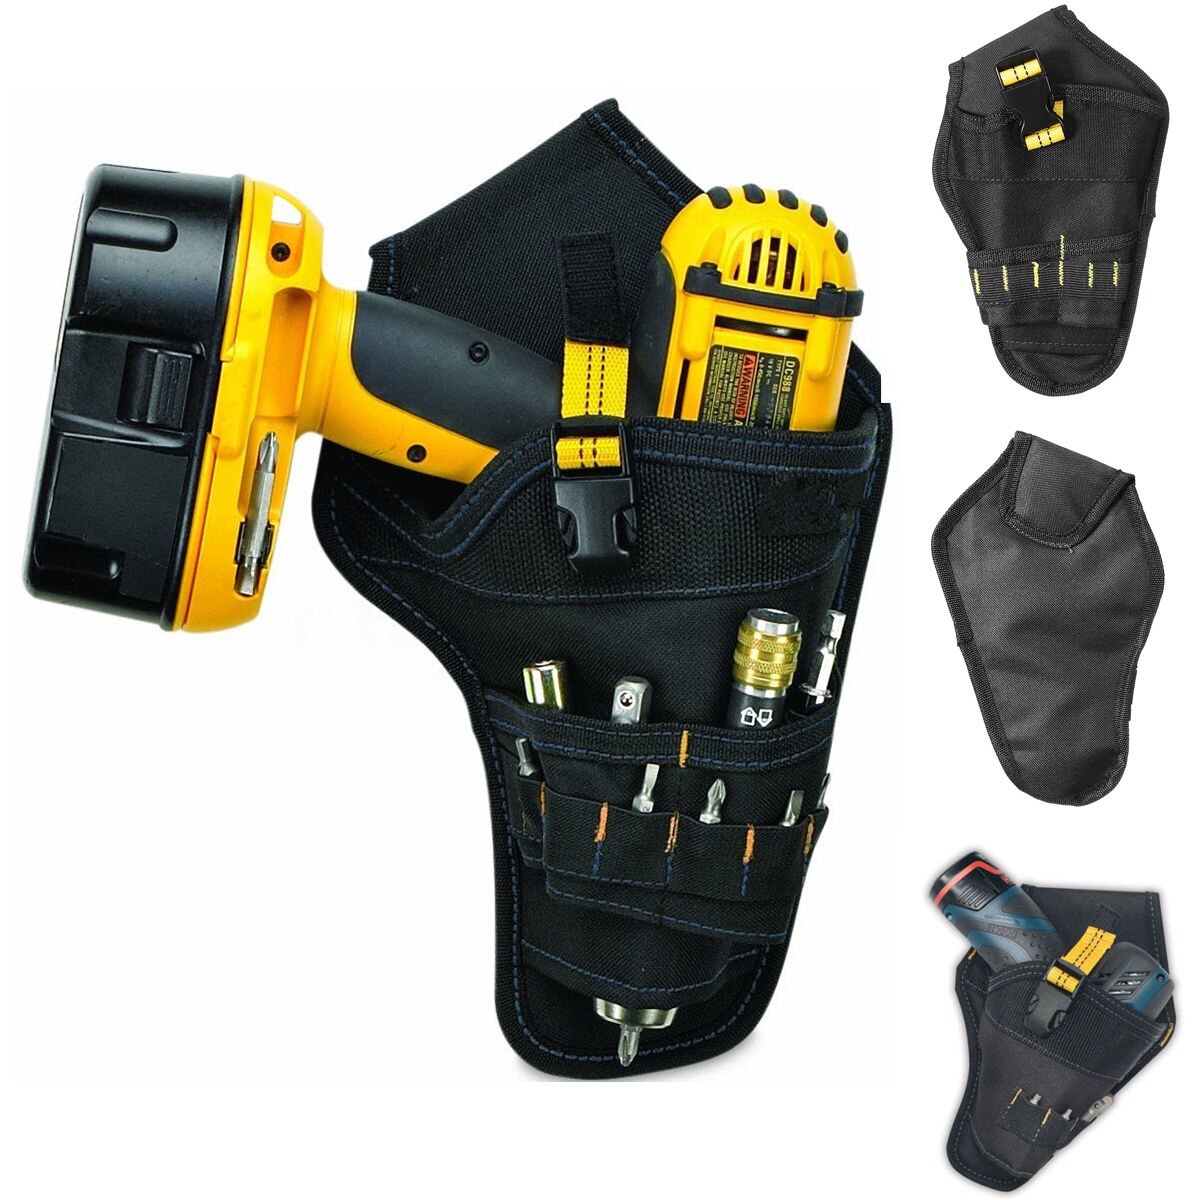 Hot sale Drill Holster Cordless Tool Heavy-Duty Tool Belt Pouch Holder Belt Bag Pocket - ebowsos